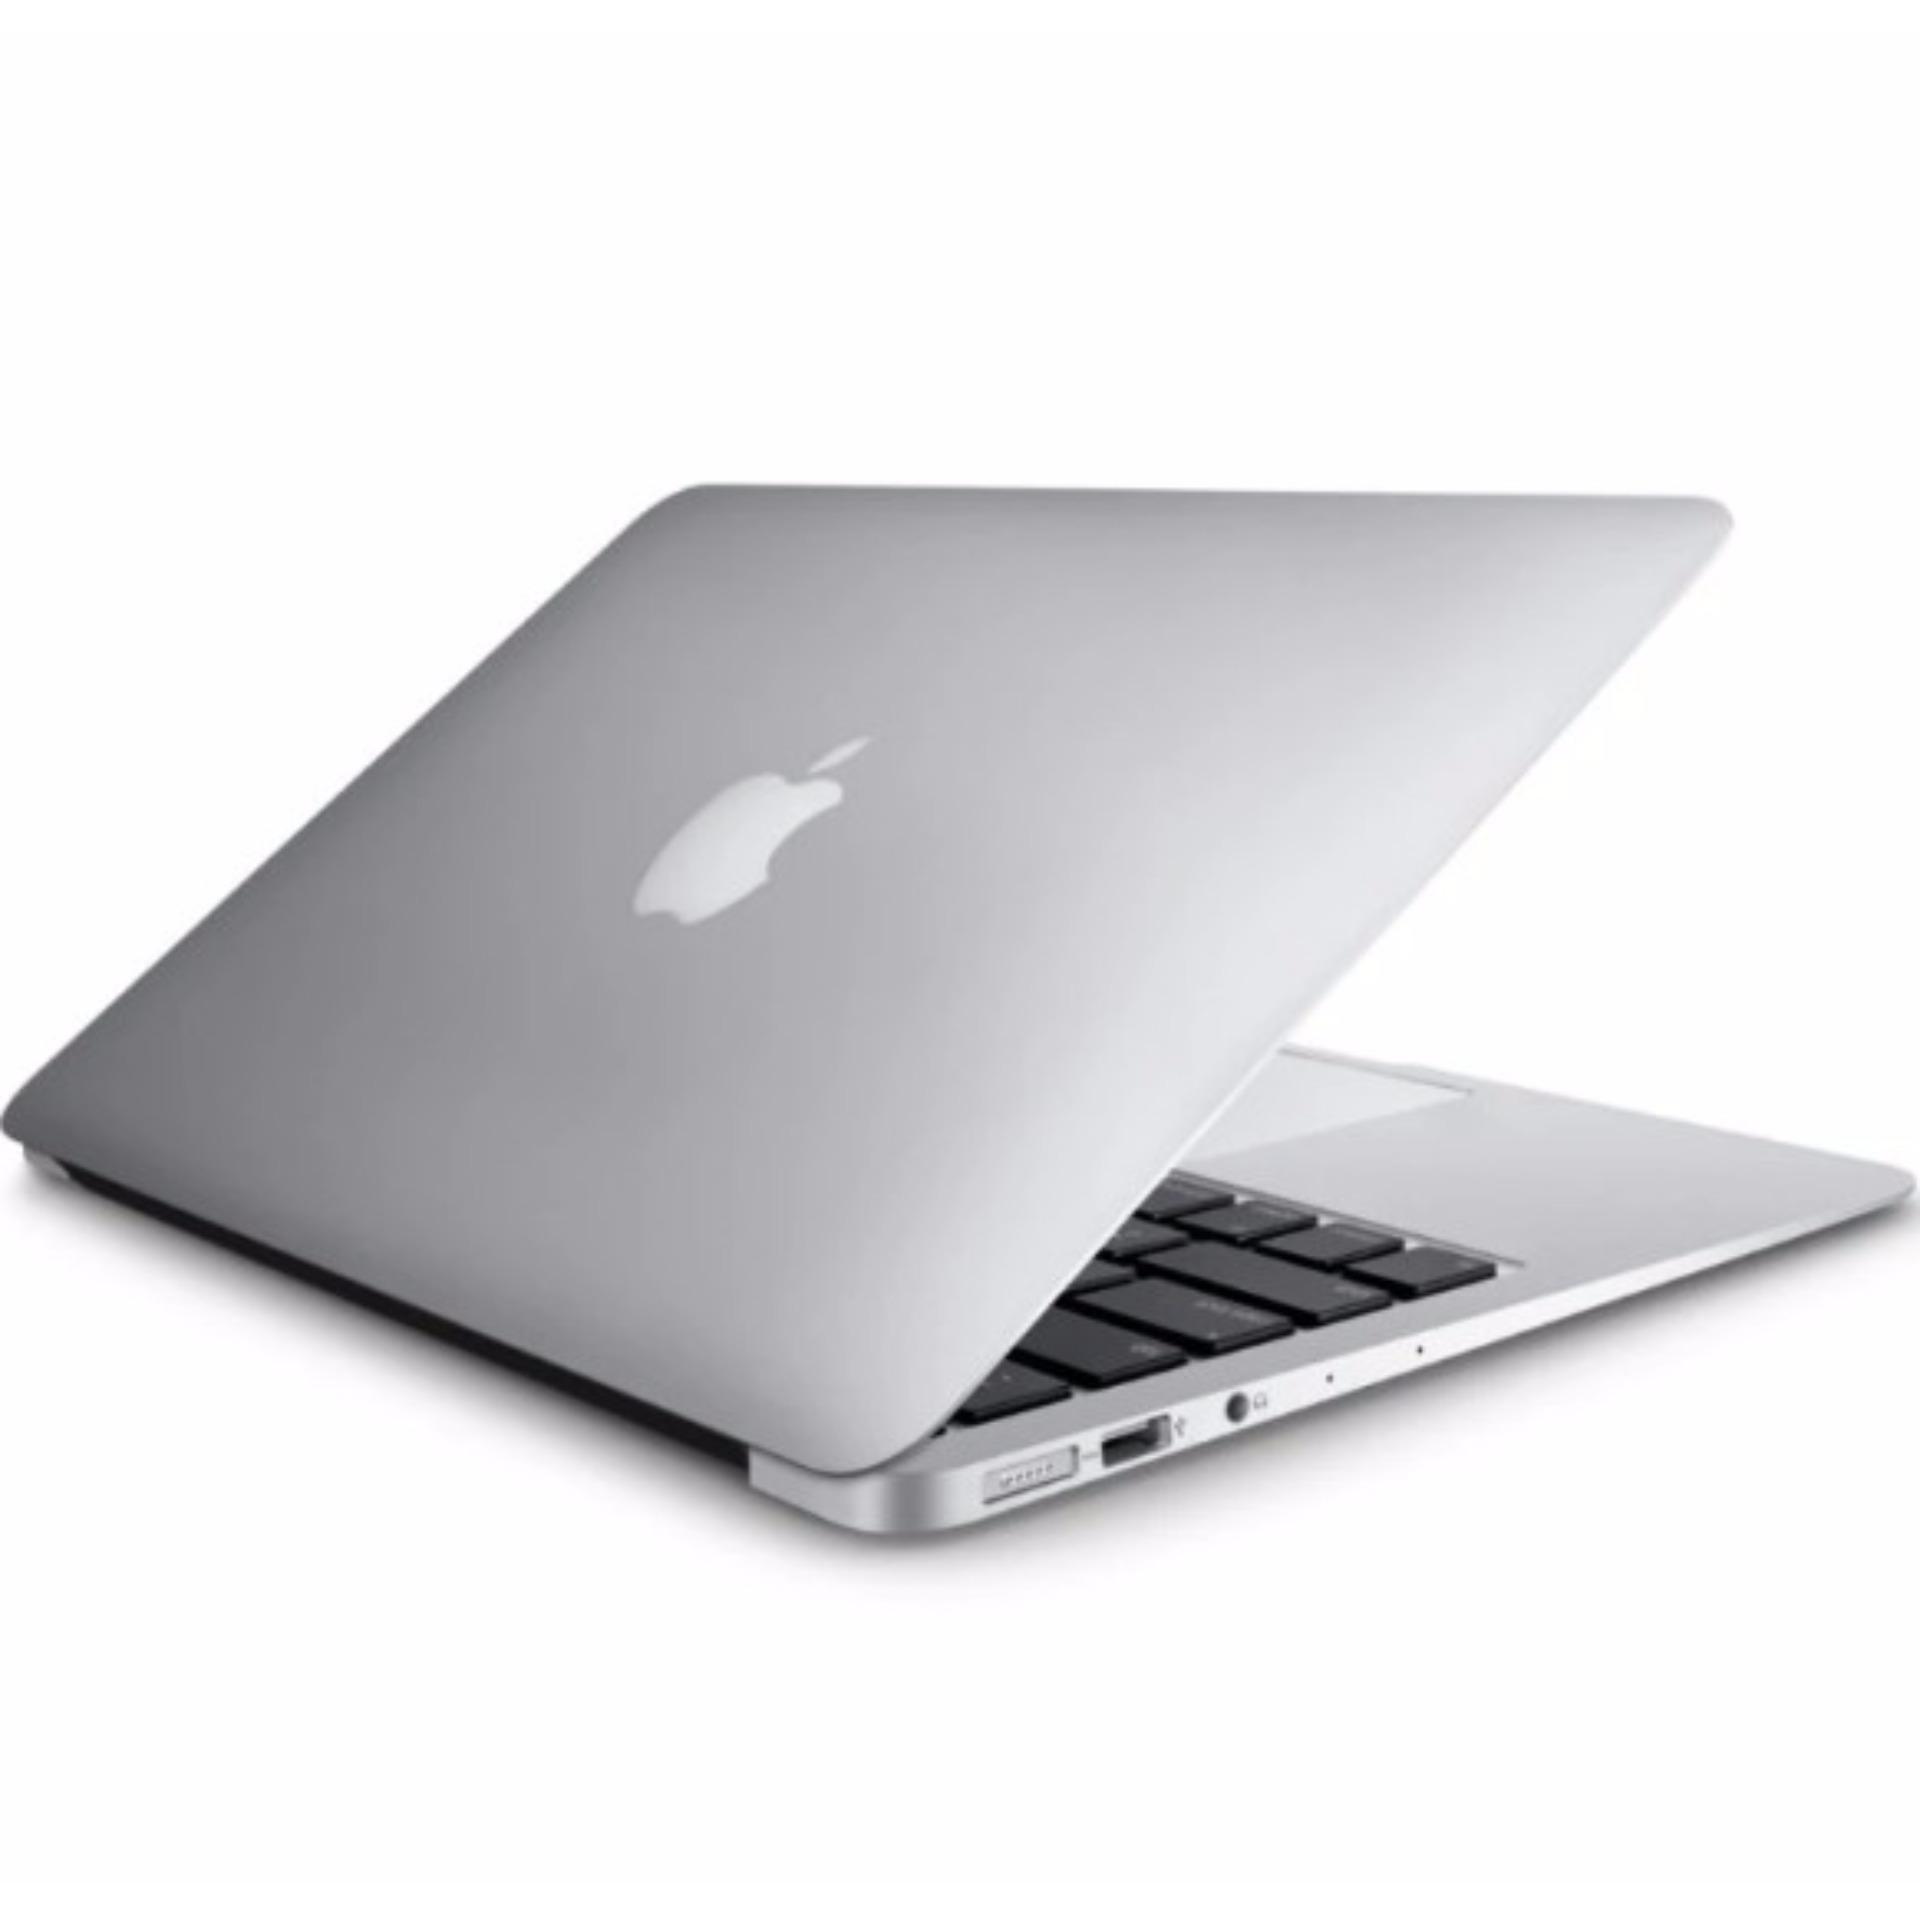 Ноутбук Apple MACBOOK Air 13 early 2015 mjve2